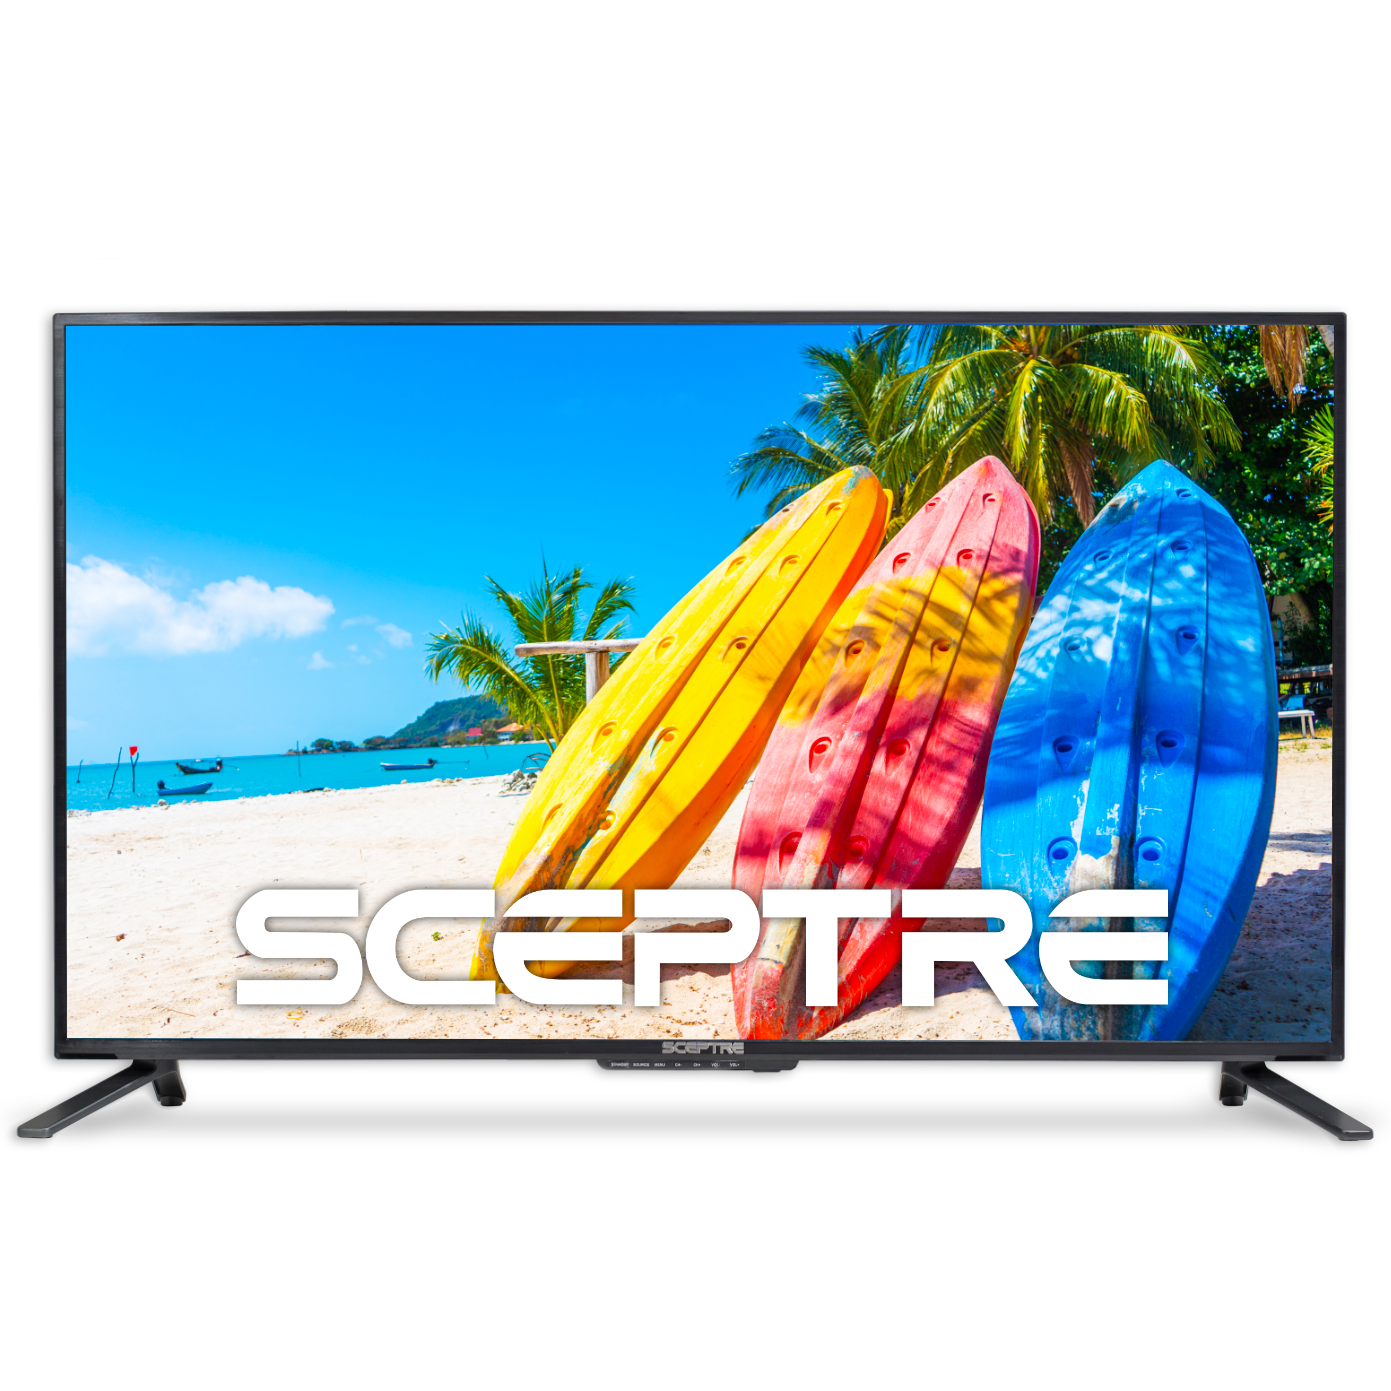 Sceptre 43" Class 4K UHD LED TV HDR U435CV-U - image 1 of 11